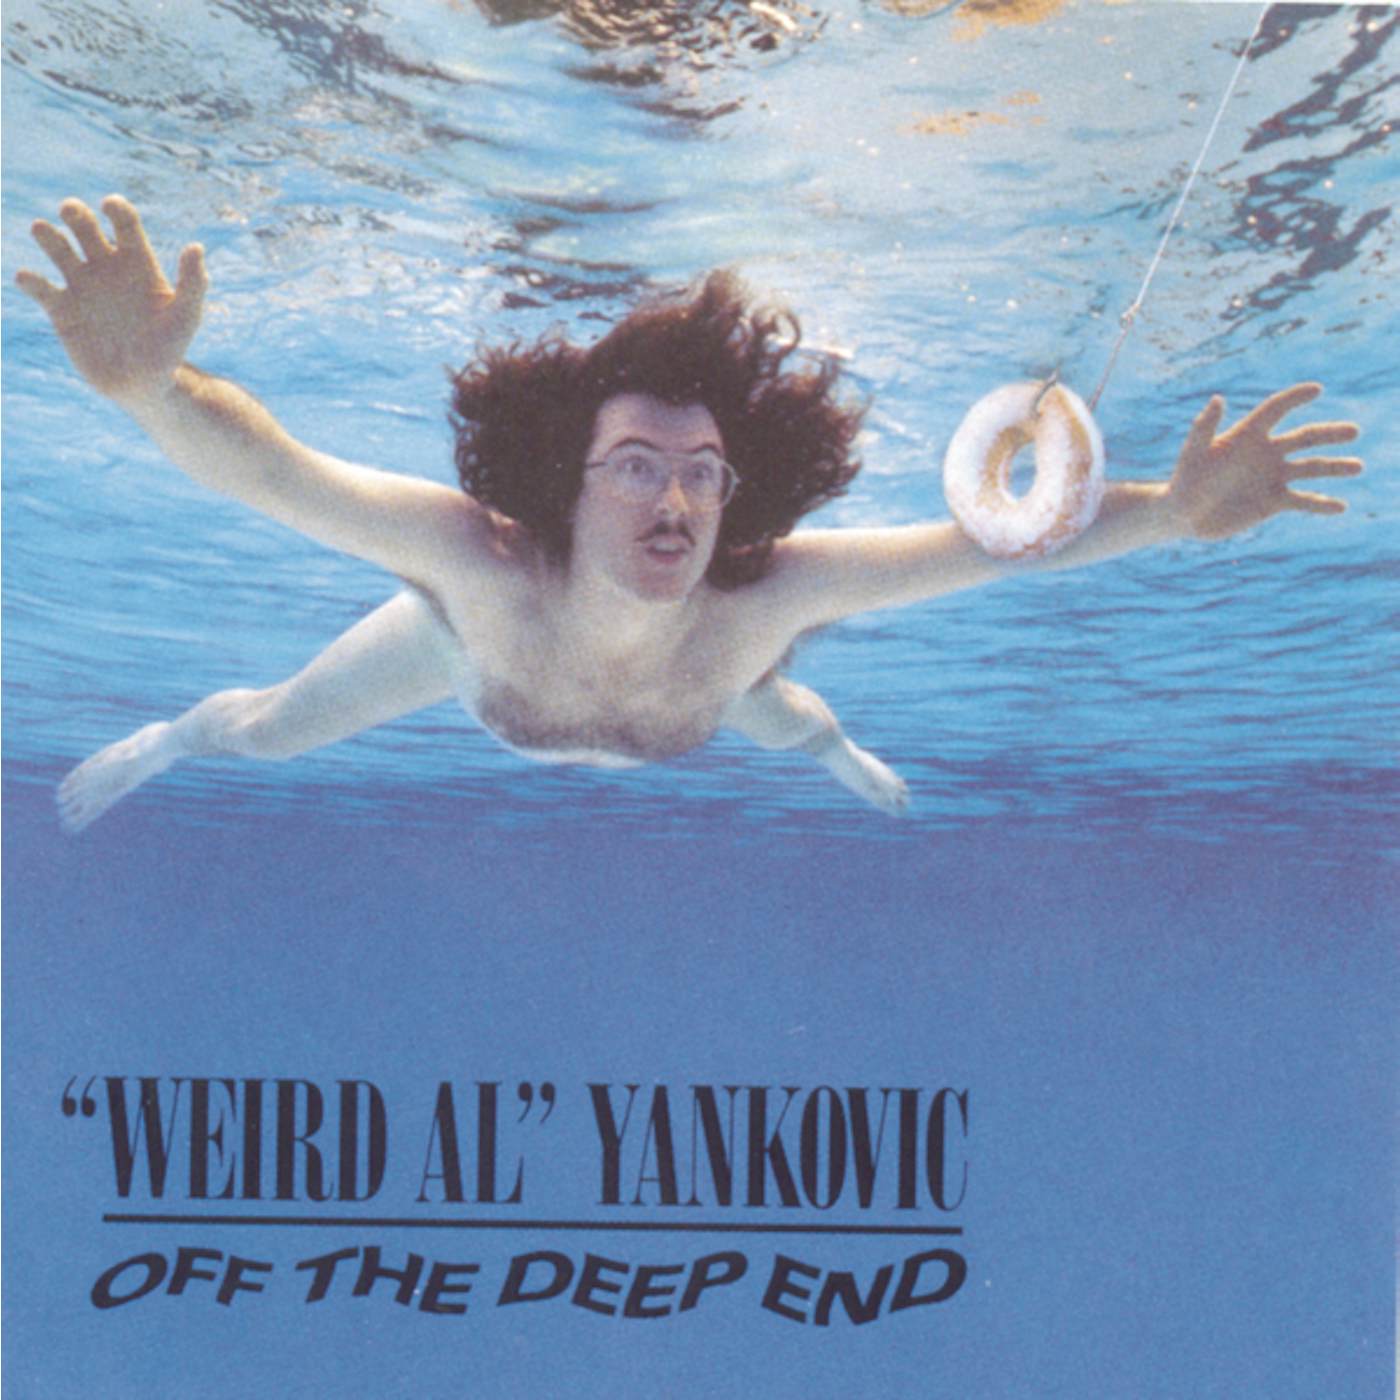 "Weird Al" Yankovic OFF THE DEEP END CD